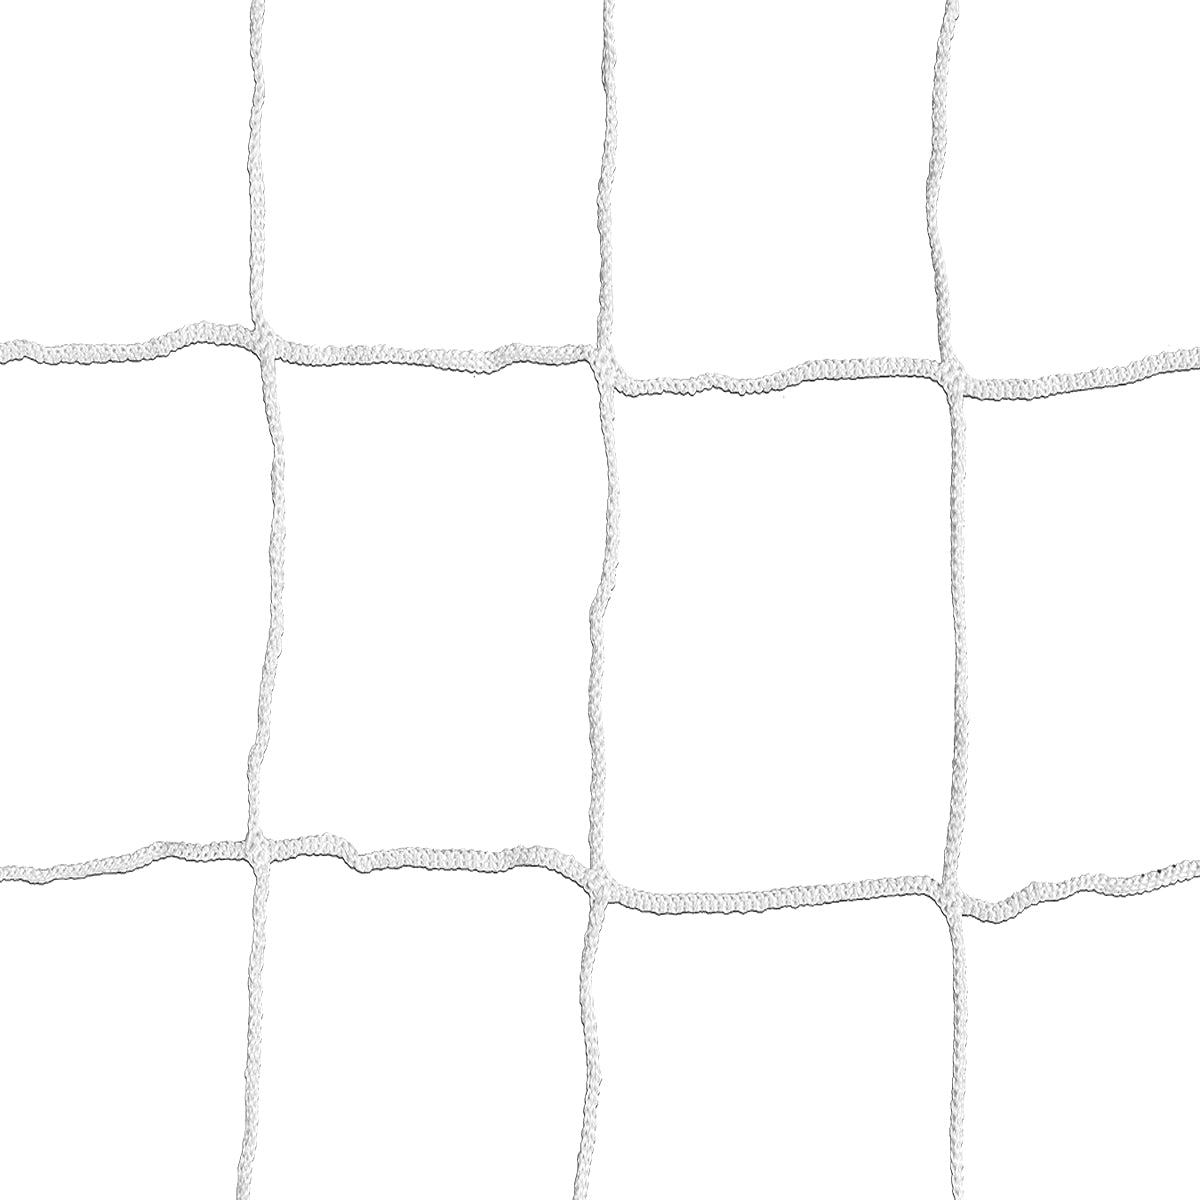 Kwikgoal 3mm Solid Braid Knotless Net | 3B7521 Nets Kwikgoal 